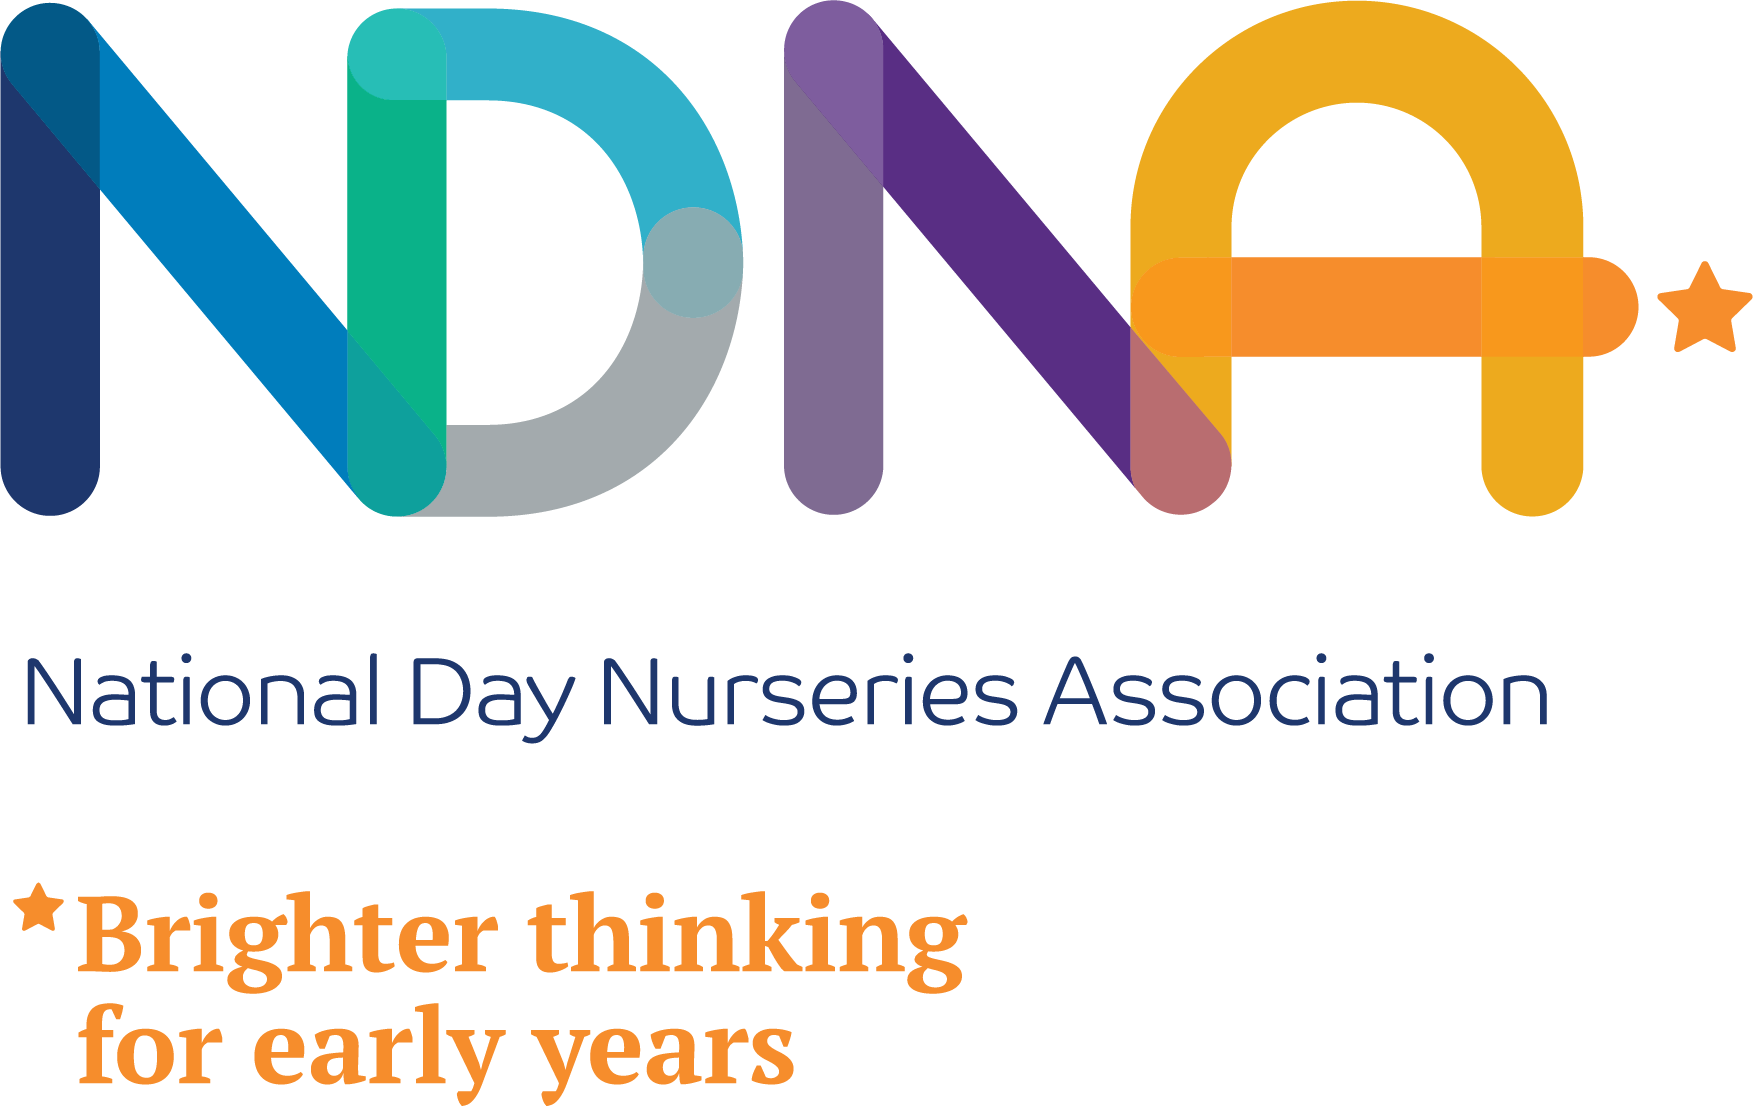 NDNA logo with strapline